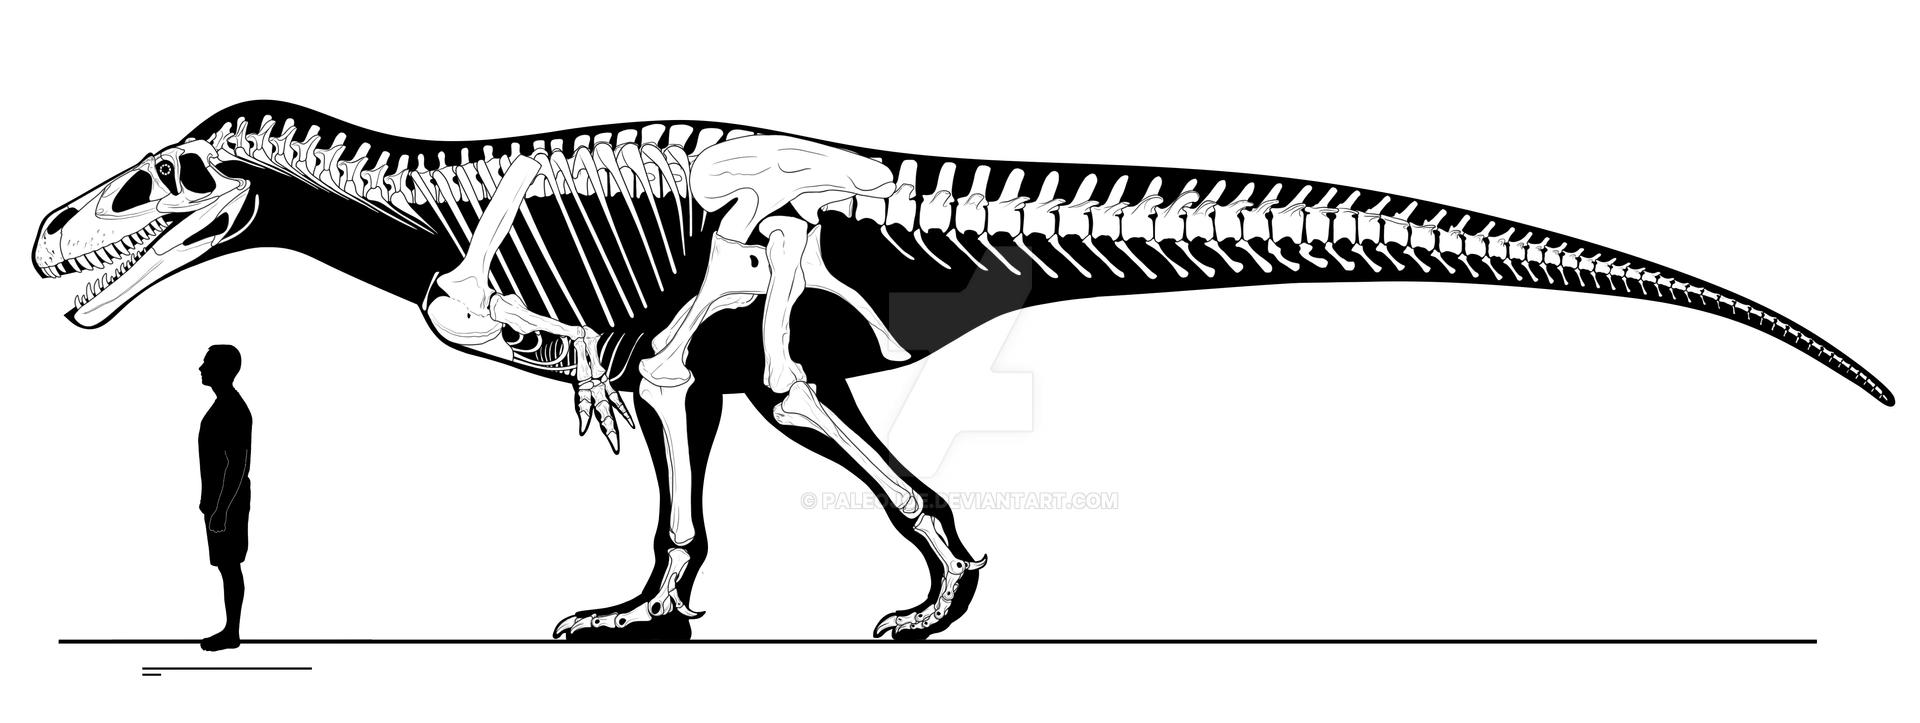 Torvosaurus tanneri by PaleoJoe on DeviantArt